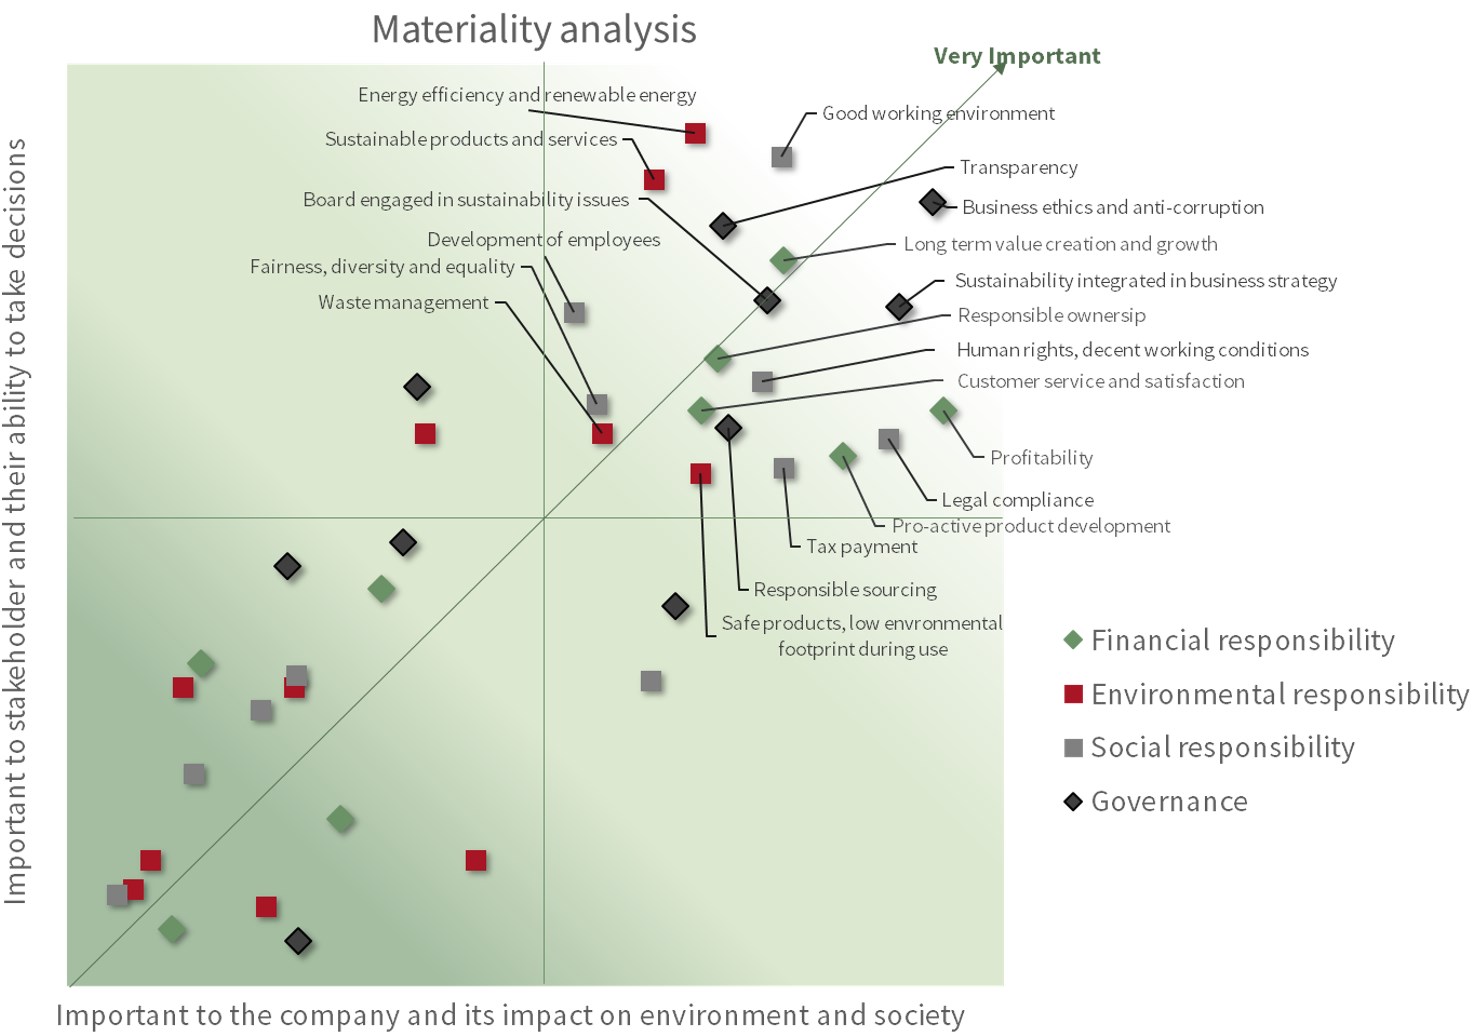 Materiality analysis chart